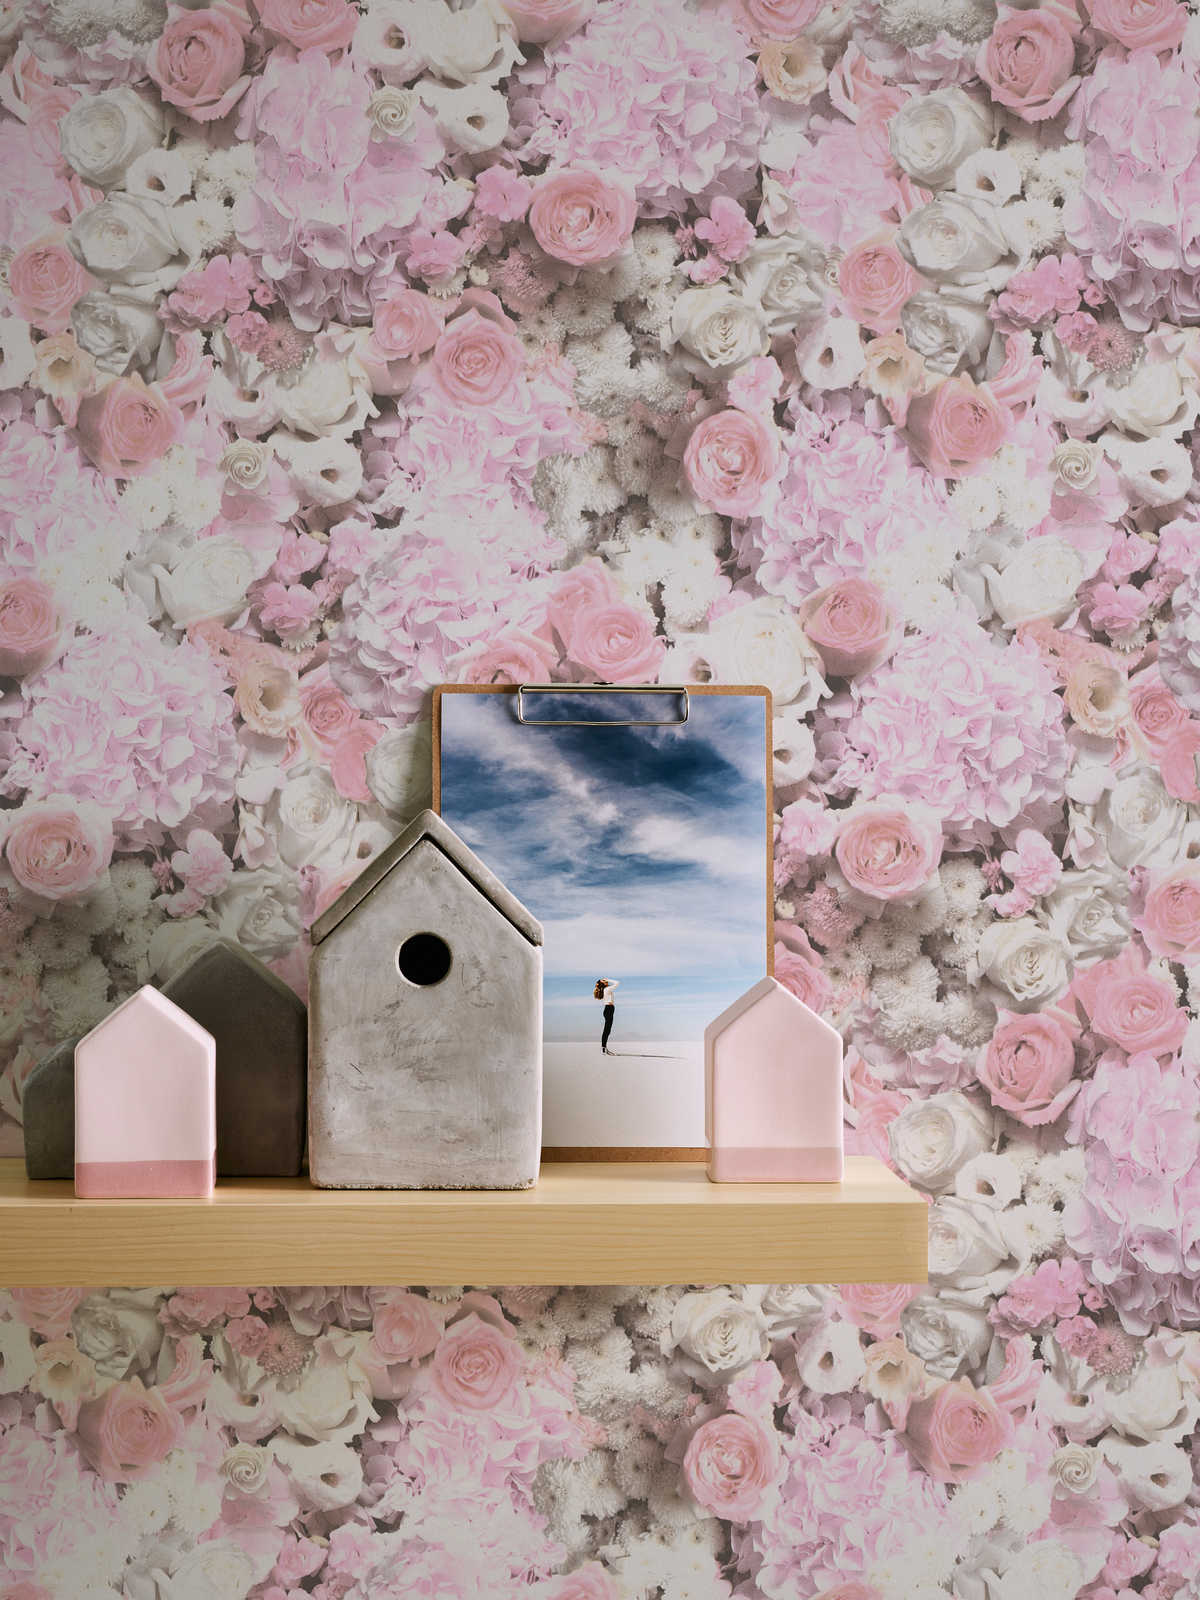             wallpaper roses & flowers pattern - pink, white
        